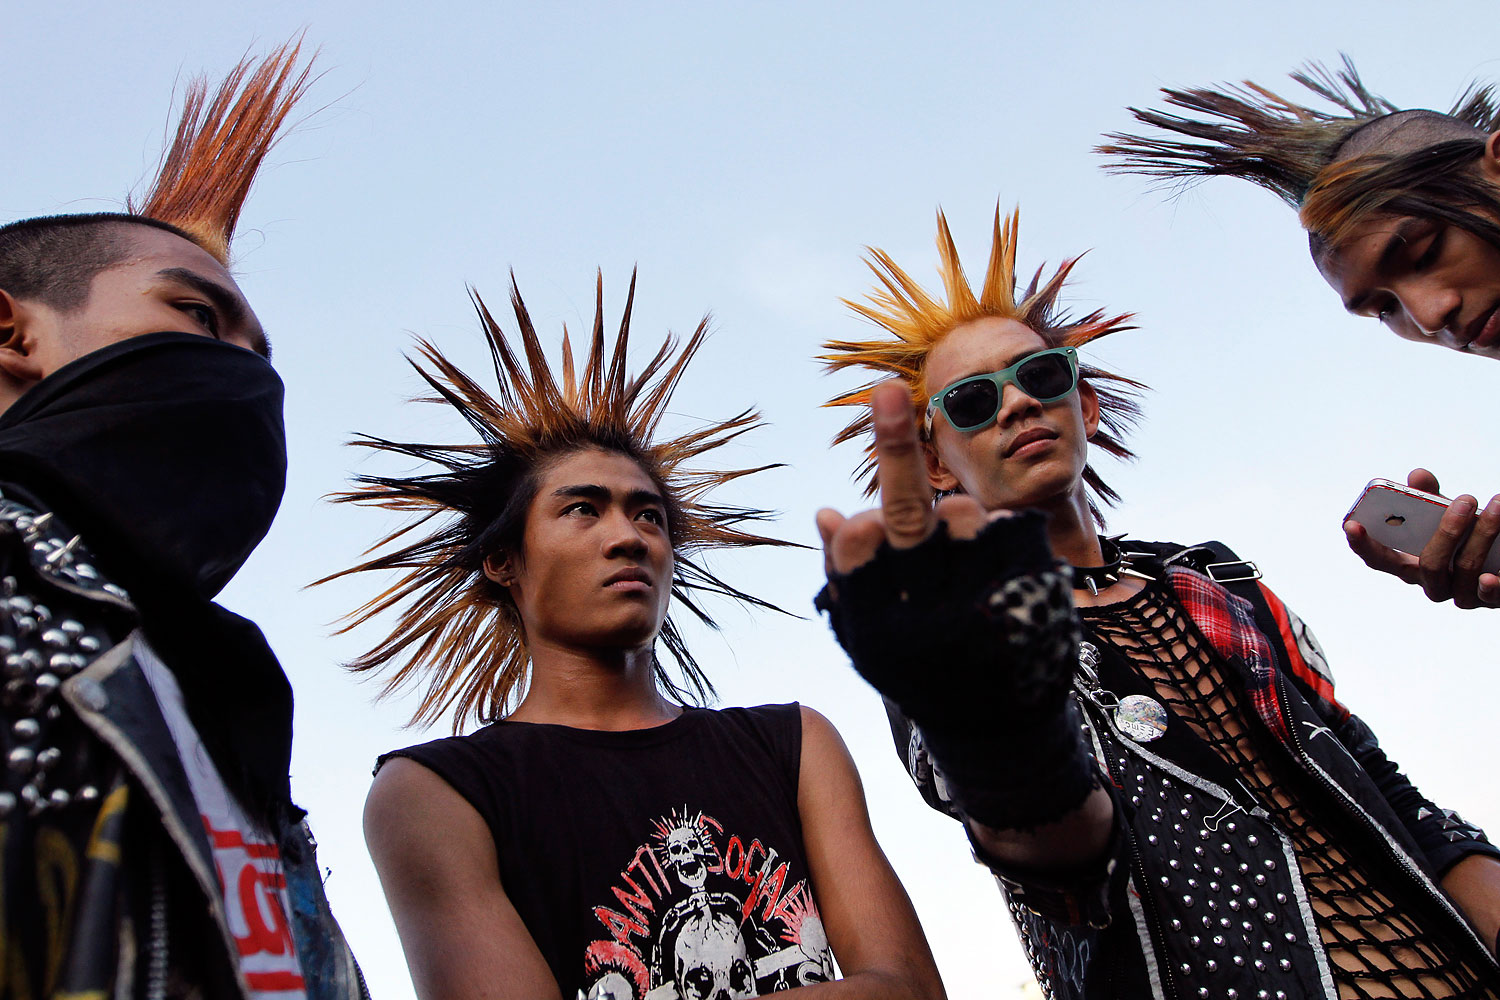 Burma punks, the colorful youth of Rangoon.